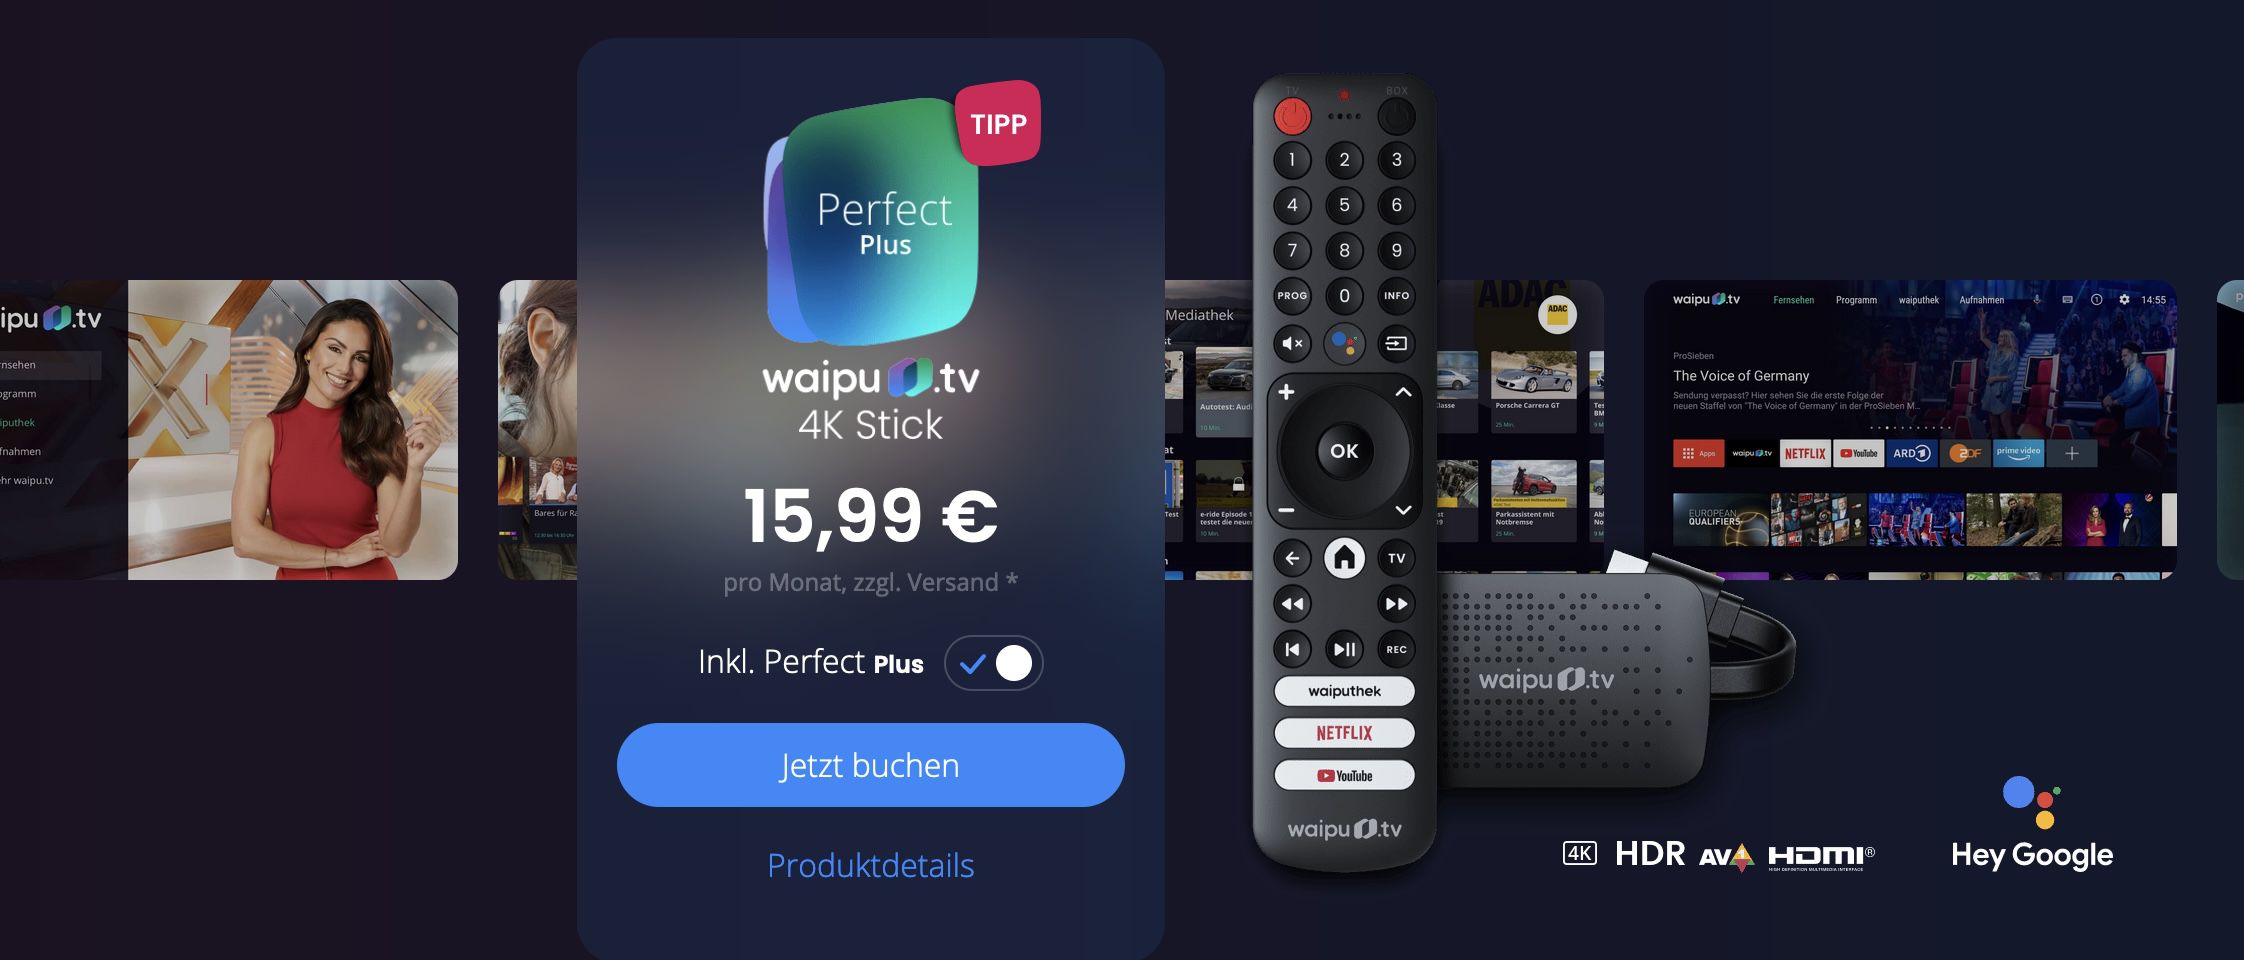 12 Monate waipu waipu + inkl. Pay-TV 15,99€ für TV Stick 4K Sender TV Perfect Plus